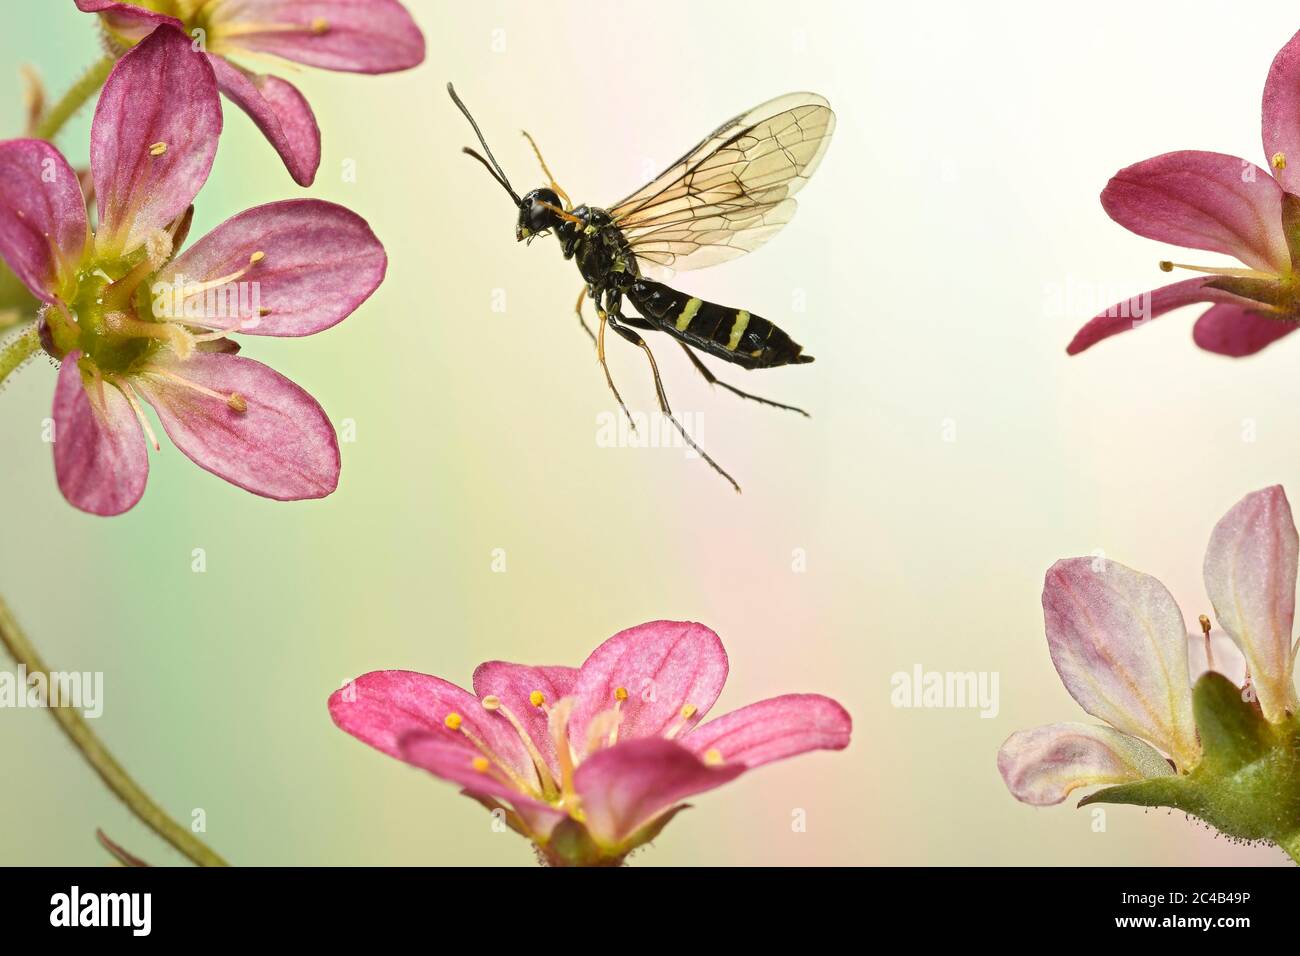 Cornstalk wasp (Cephus pygmaeus) in flight on the flowers of the Saxifraga arendsii, Germany Stock Photo